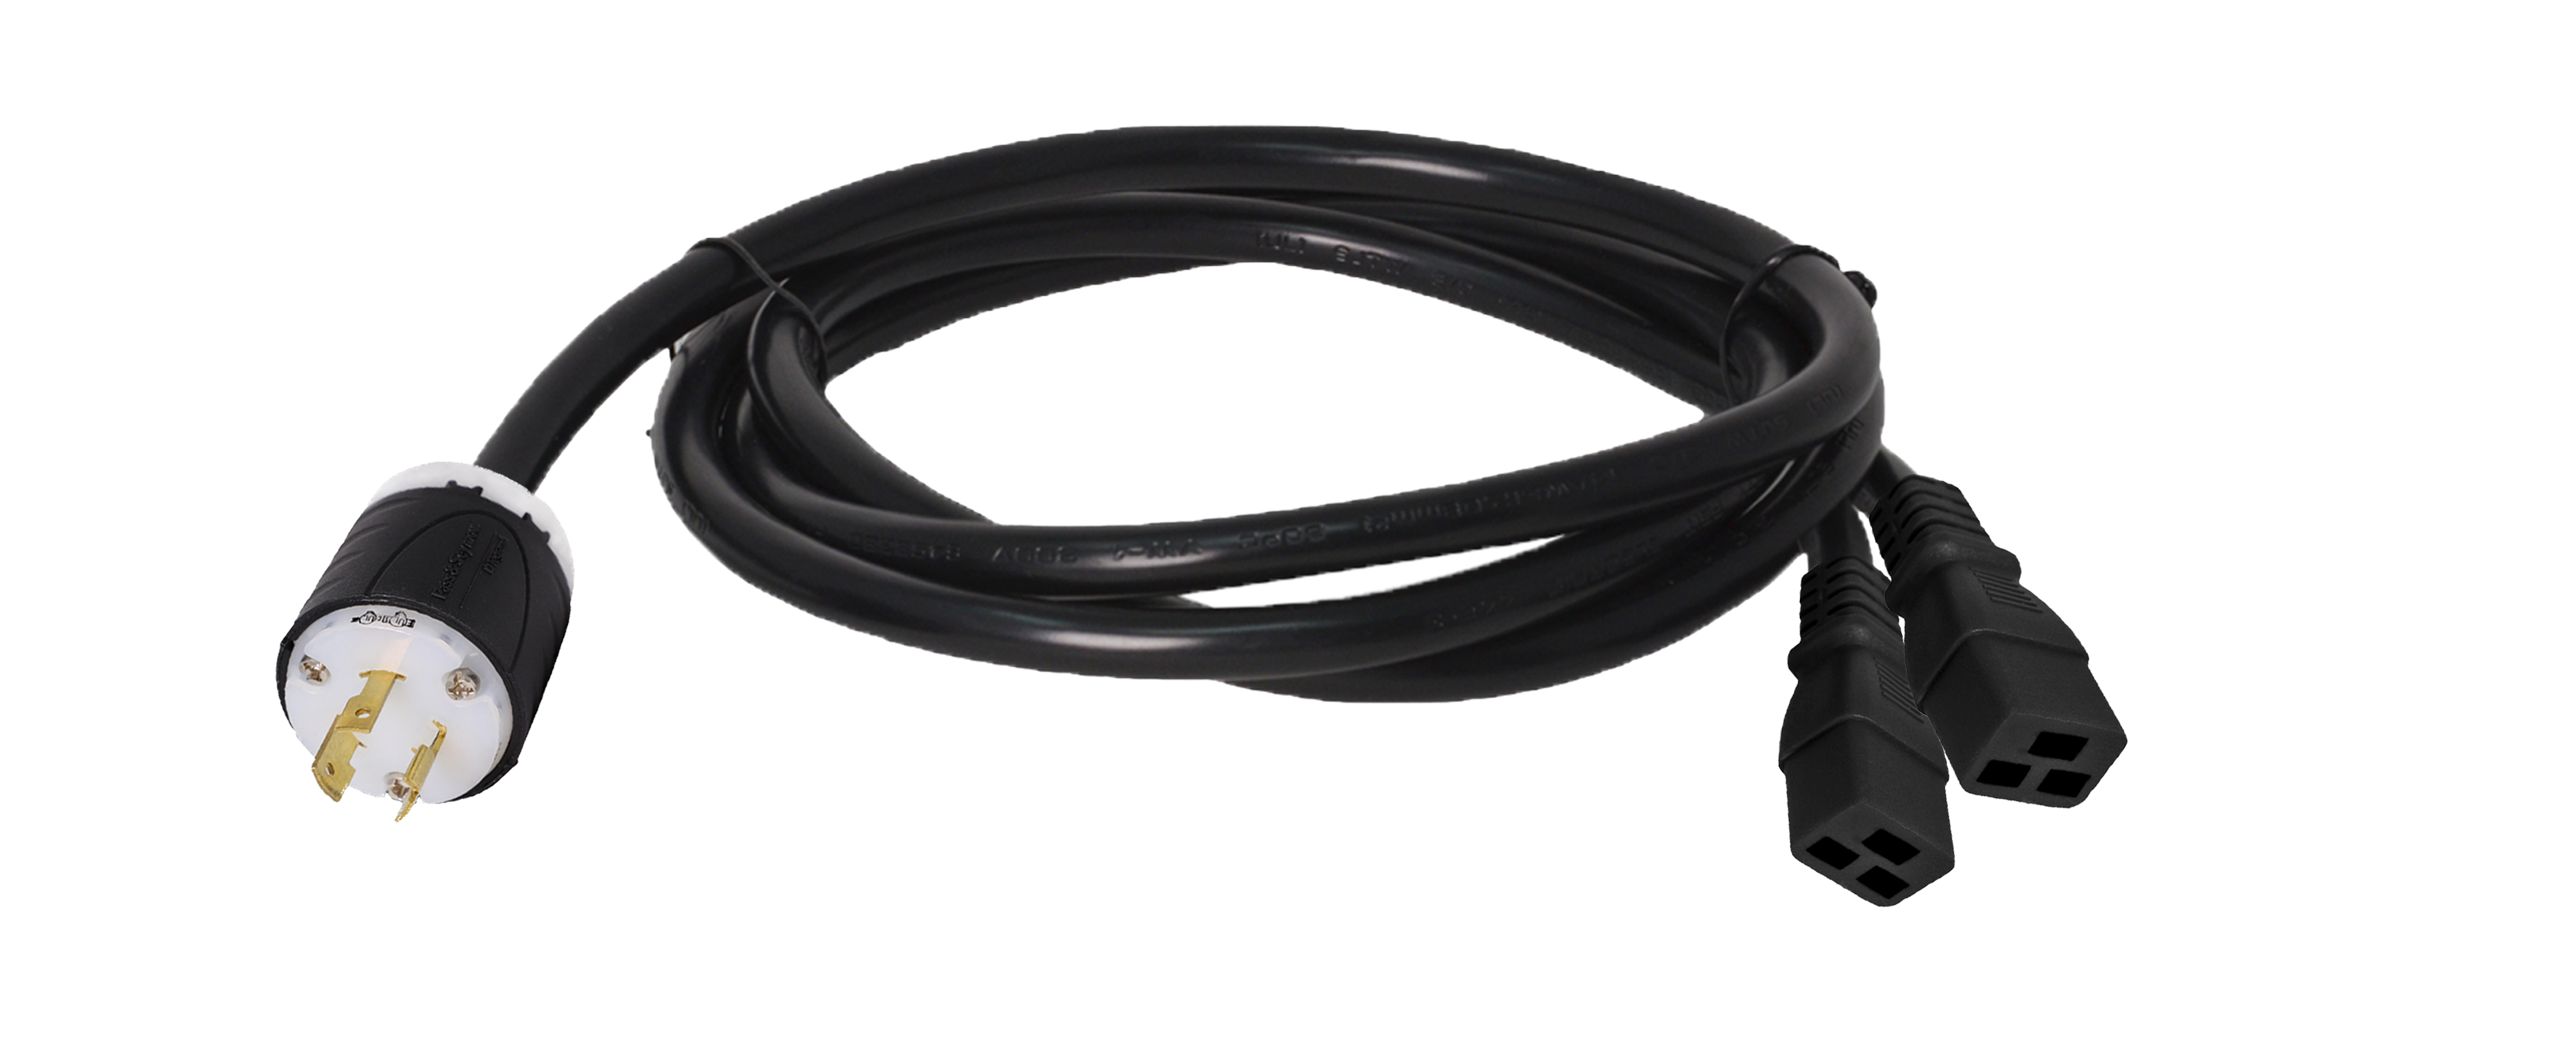 splitter power cord, l6-20 c19